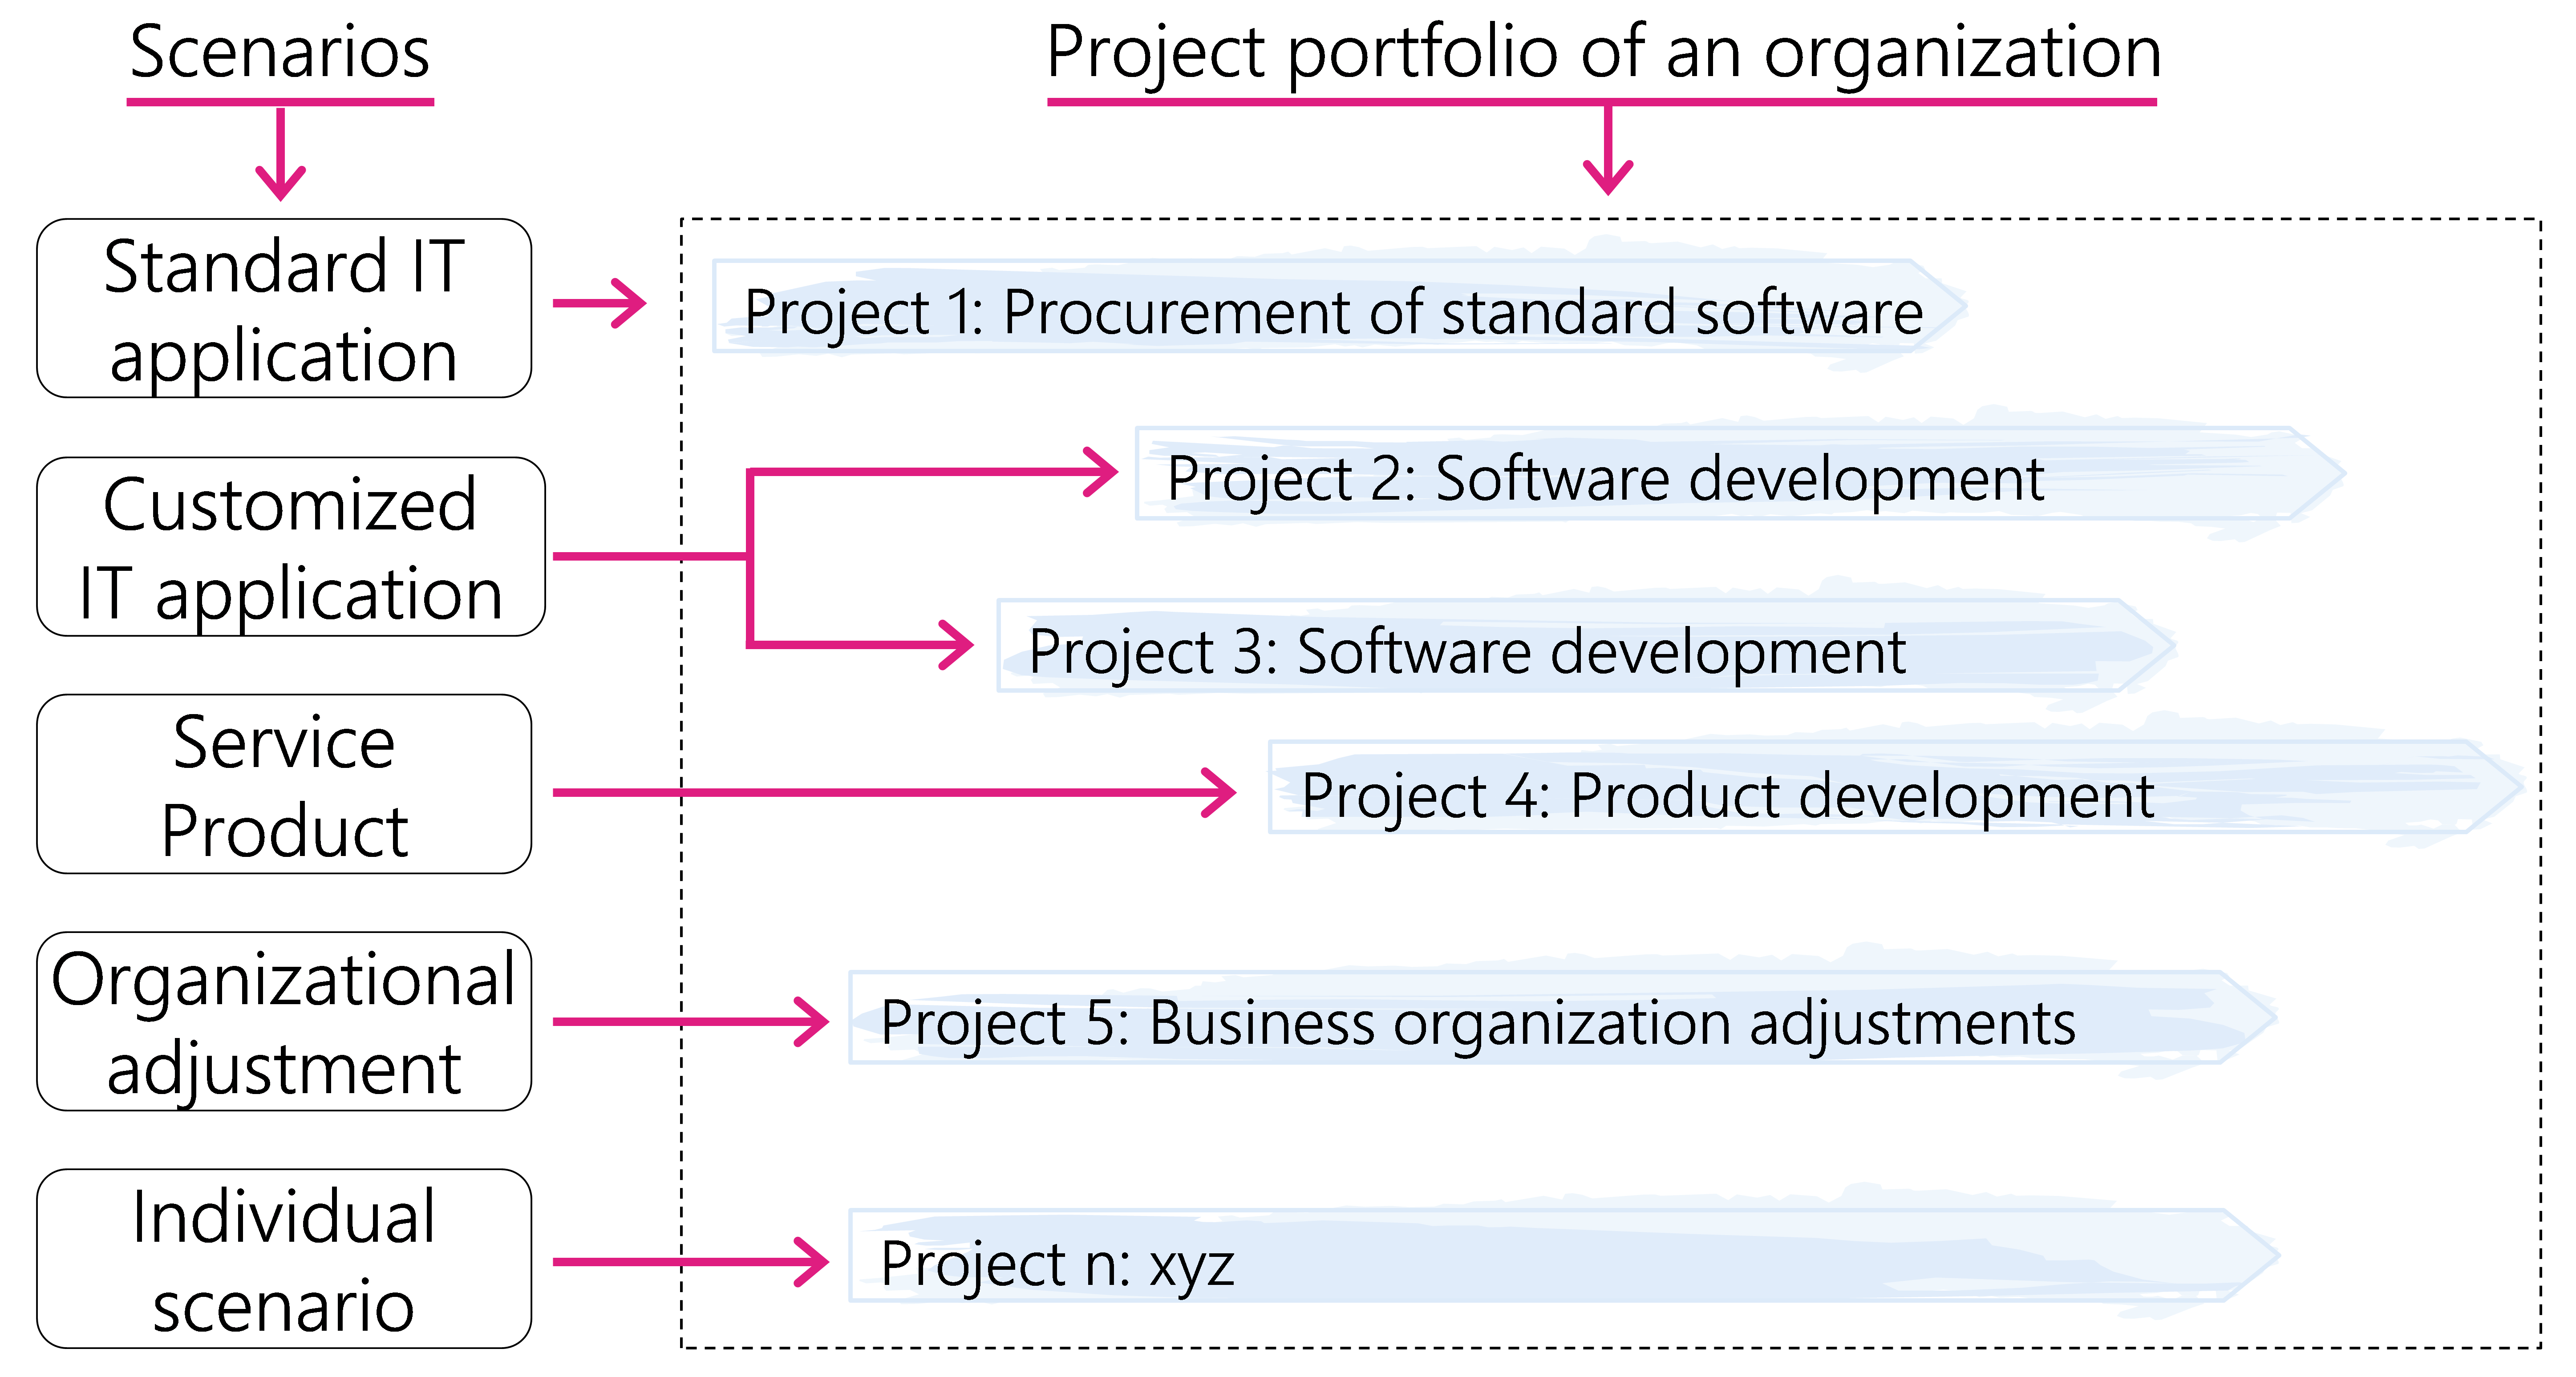 Figure 1: Scenarios and project portfolio of an organization